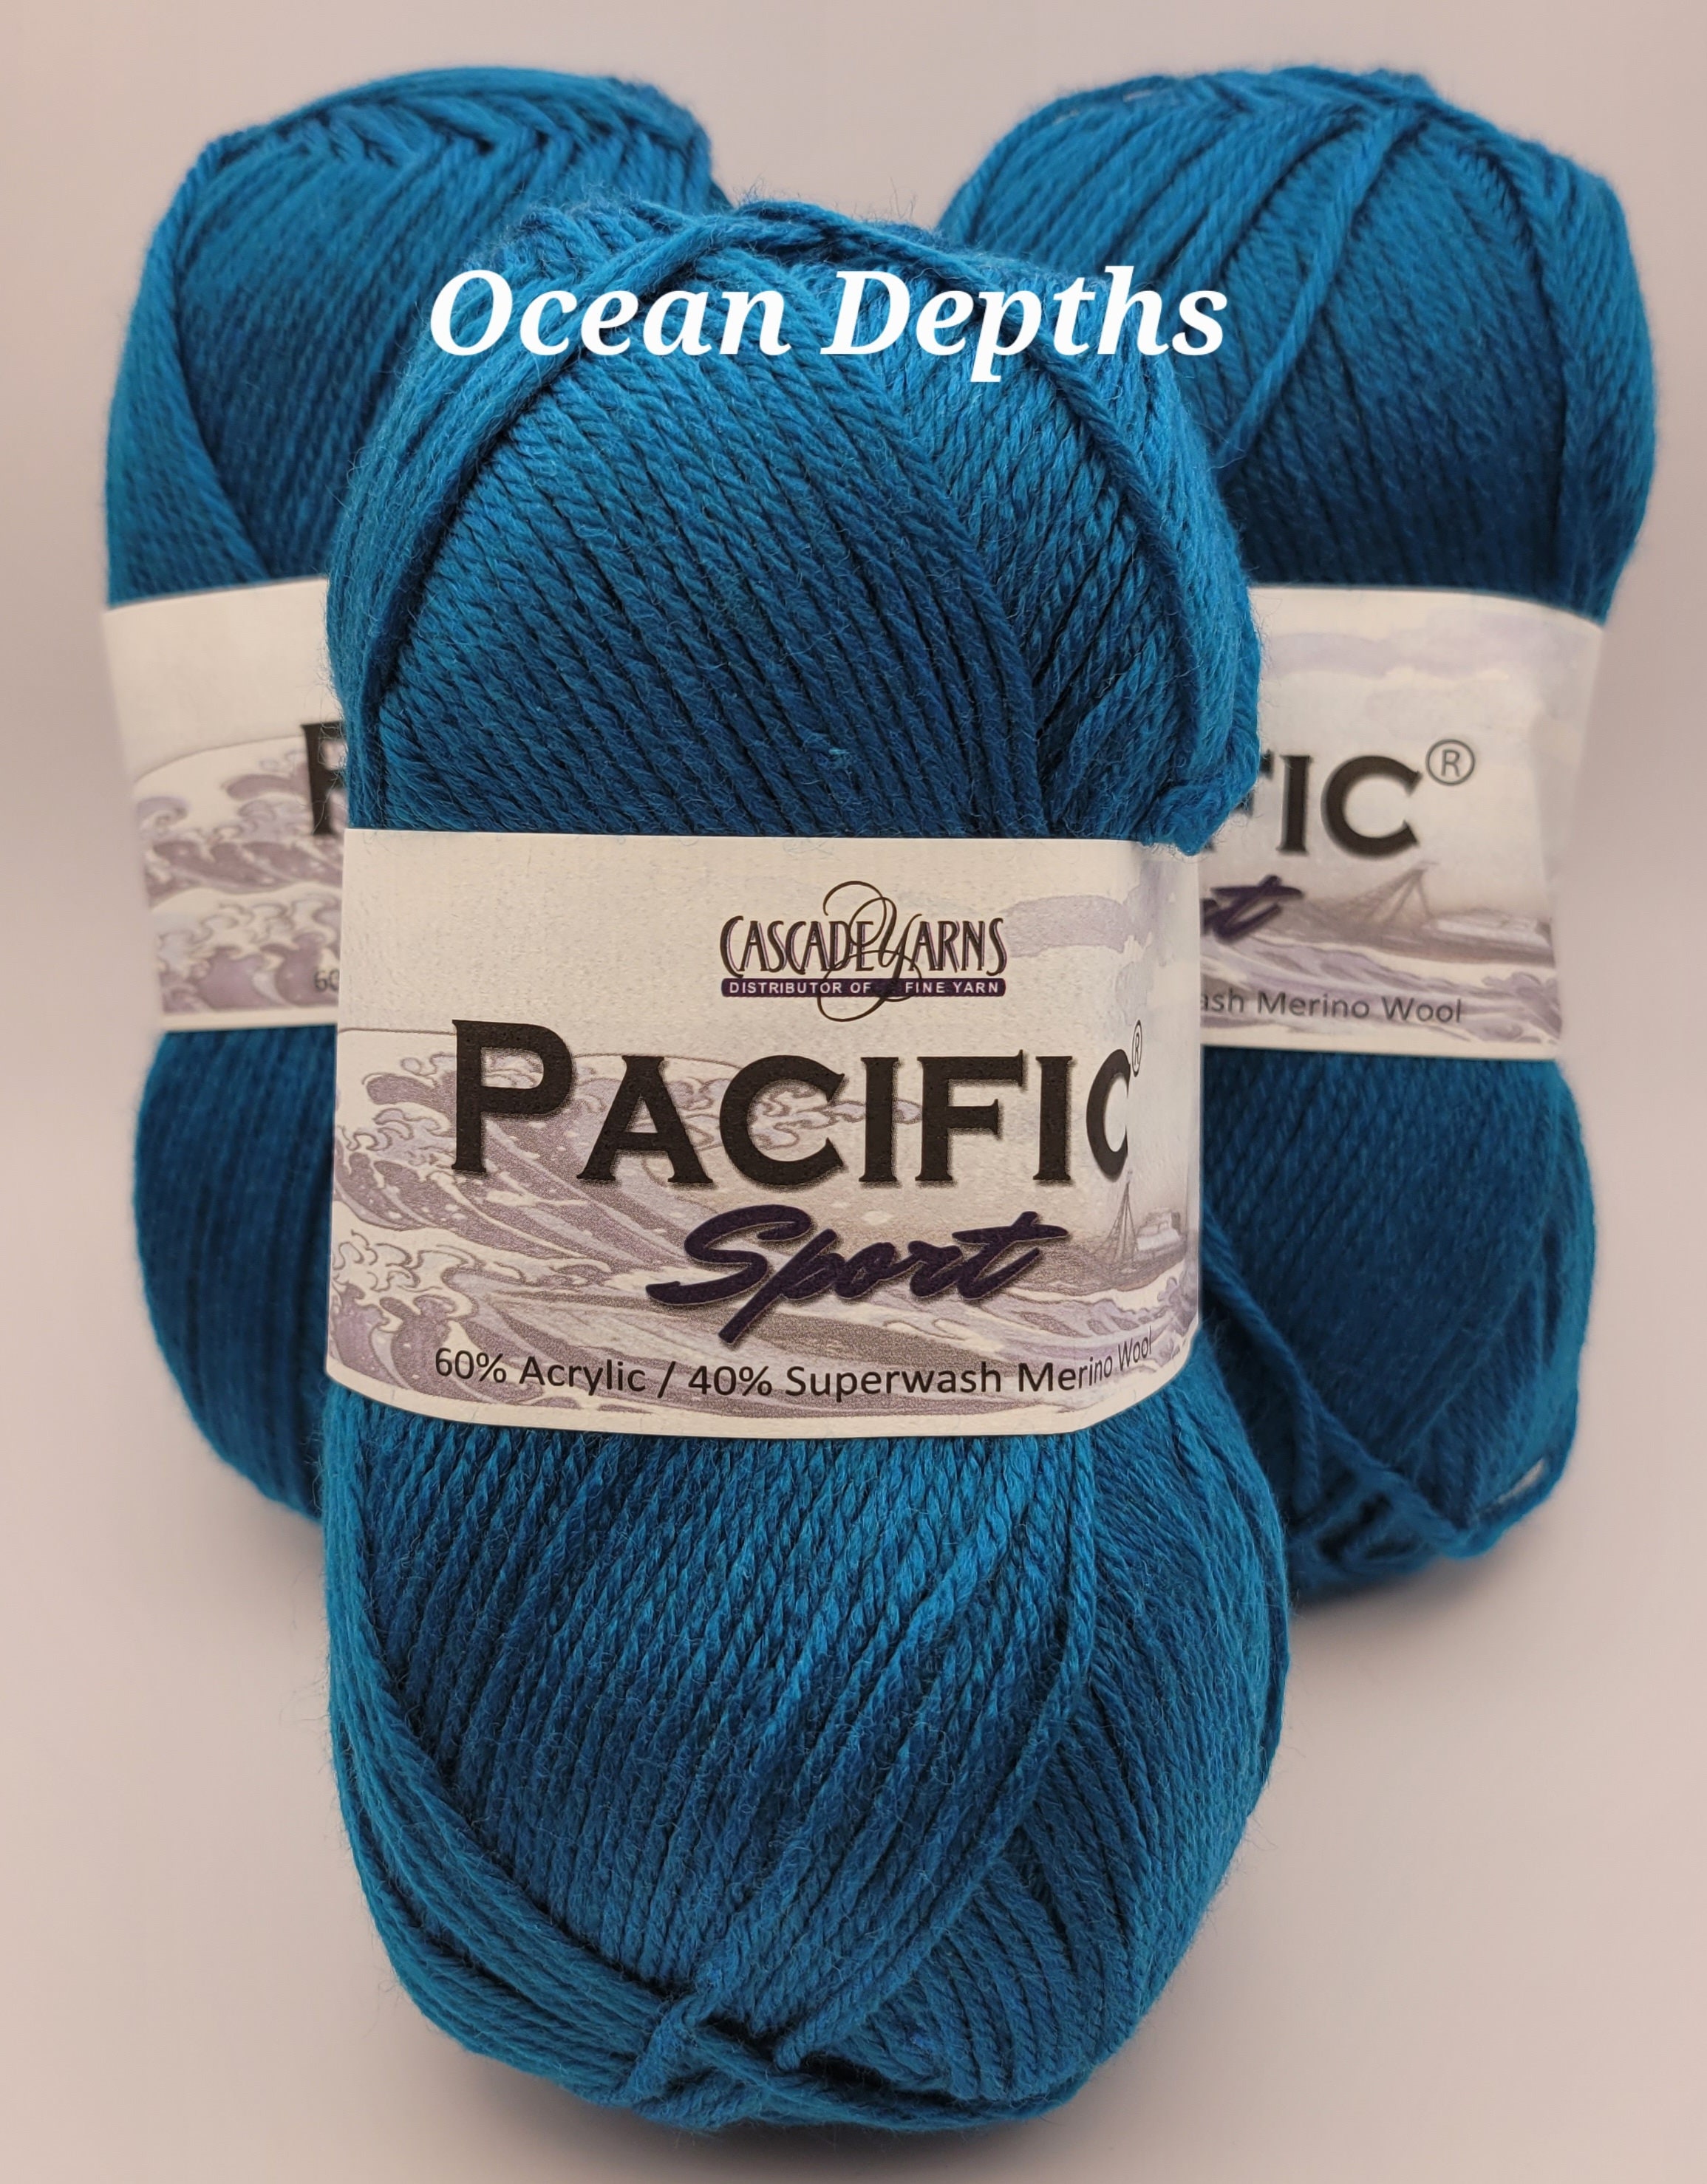 Cascade Yarns Pacific Bulky Yarn at WEBS